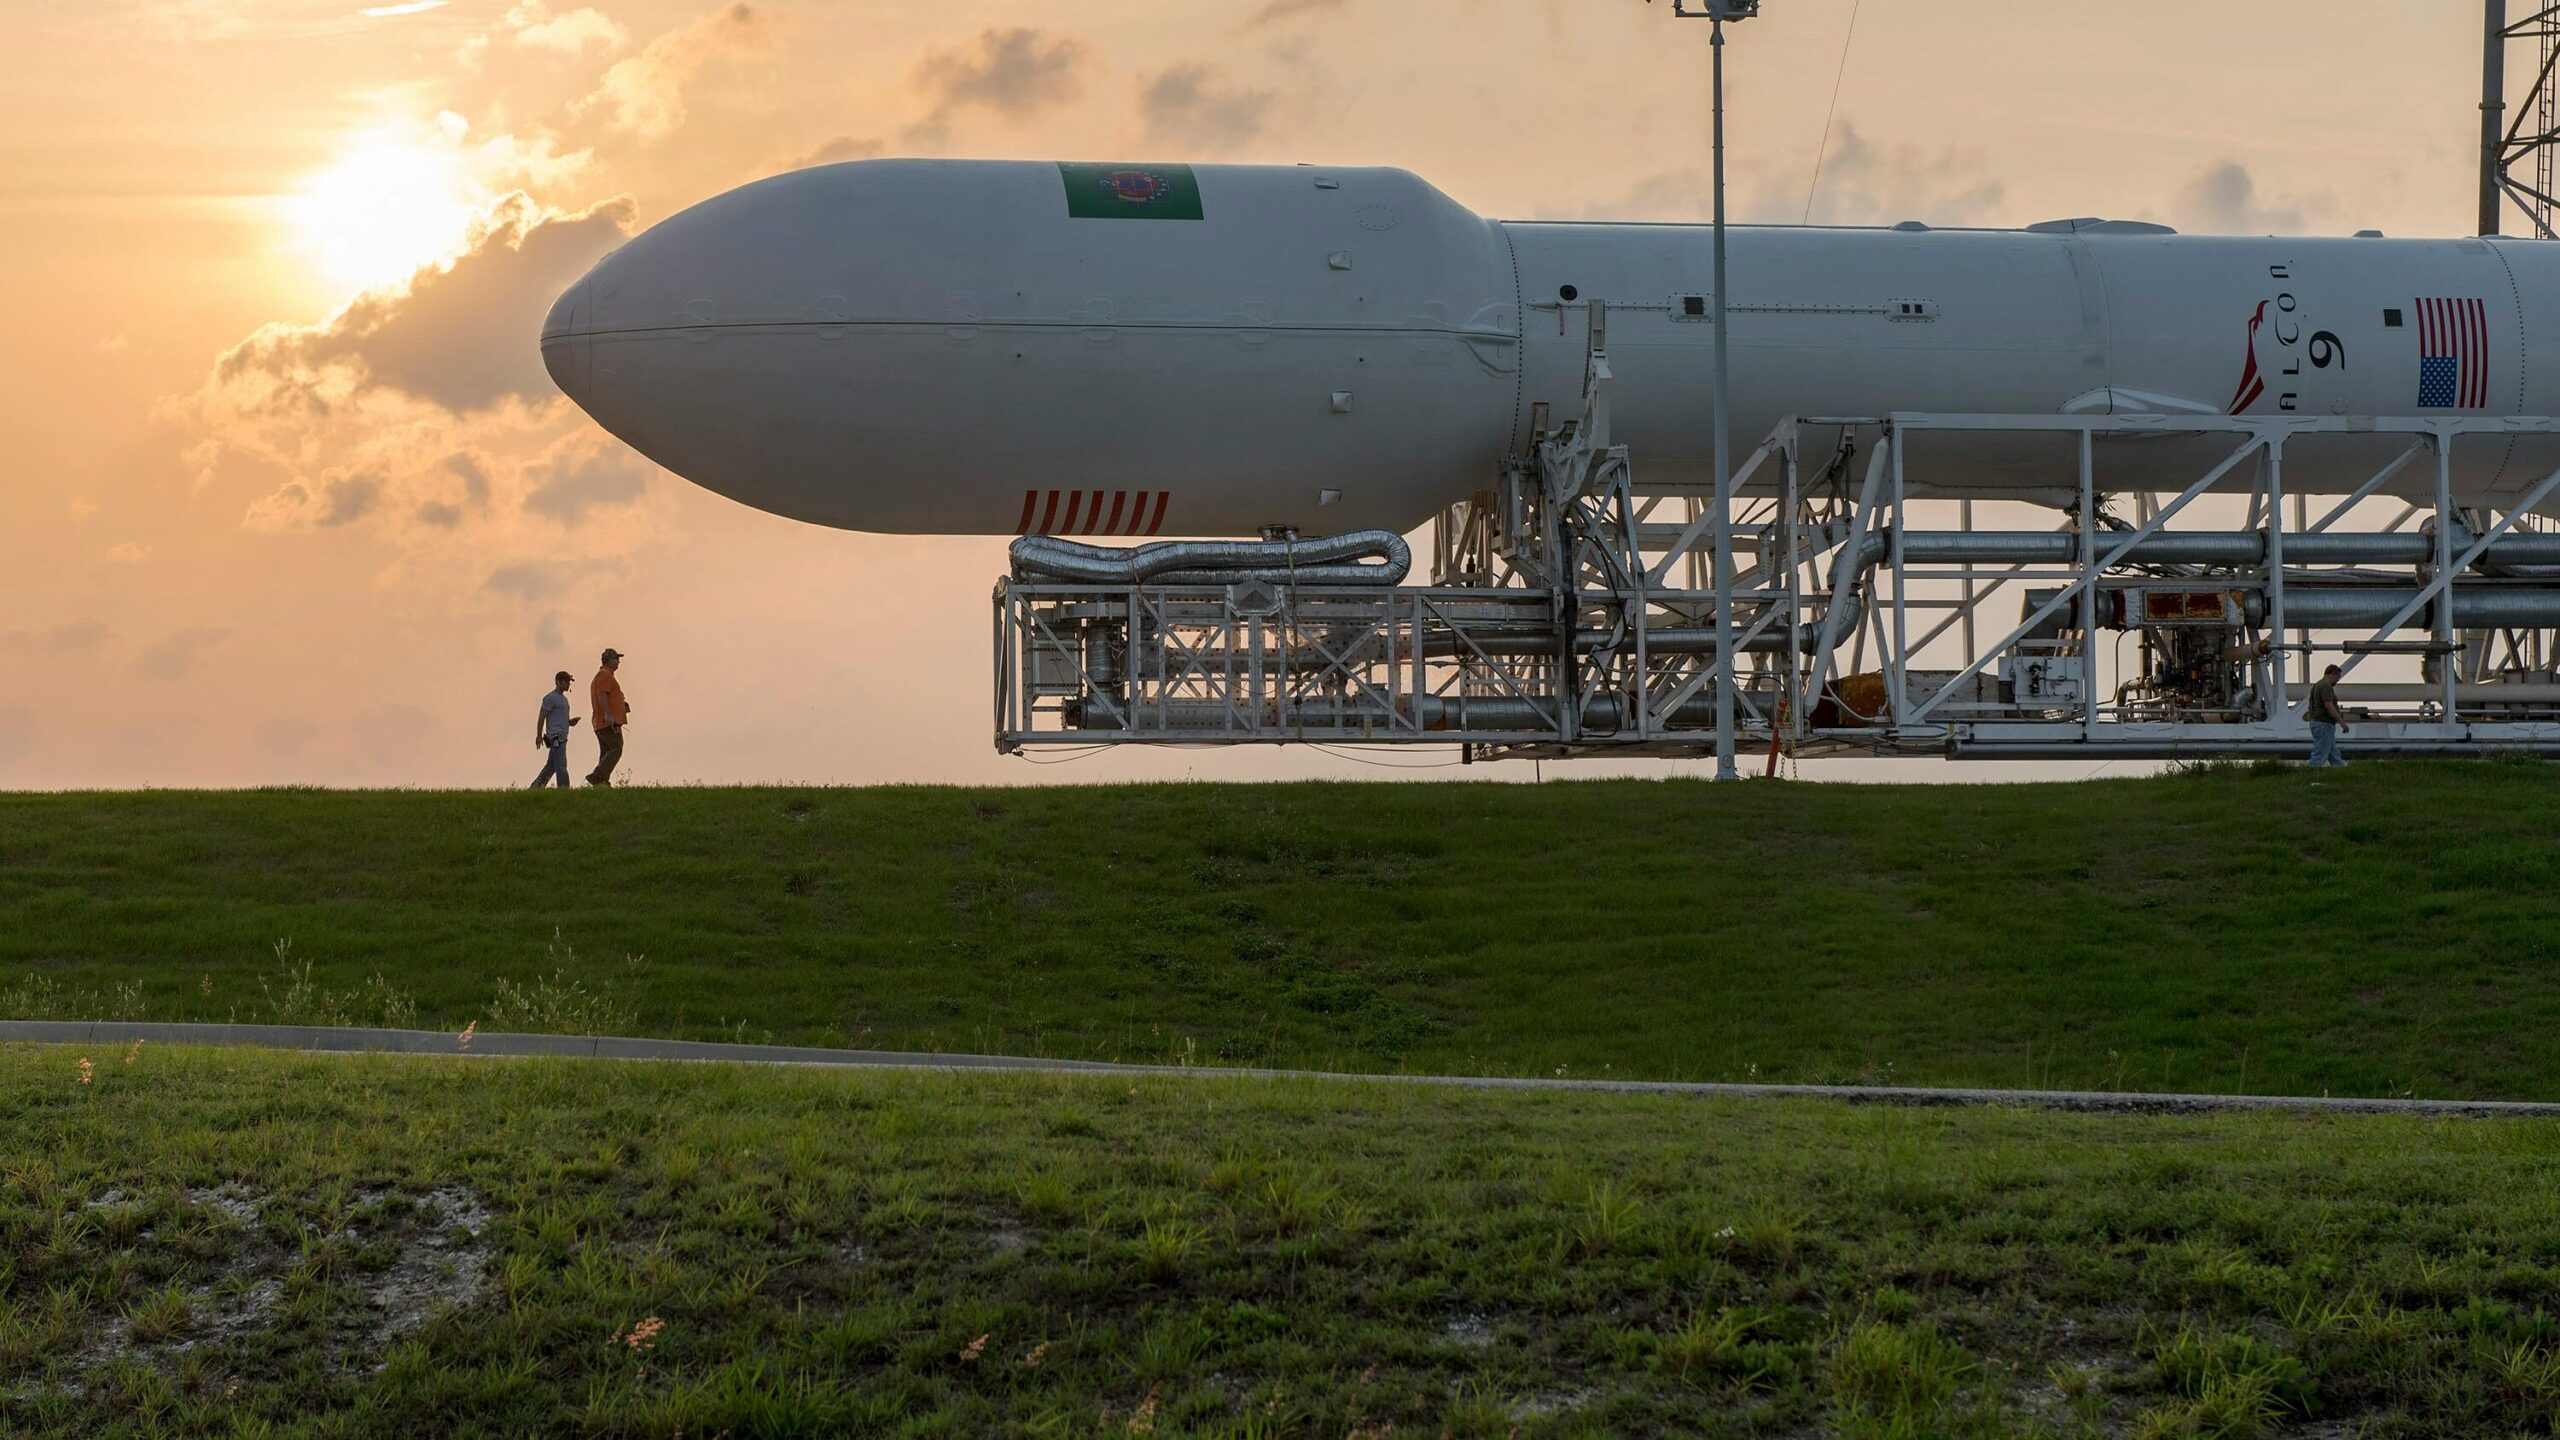 Starship SpaceX Rocket on ground